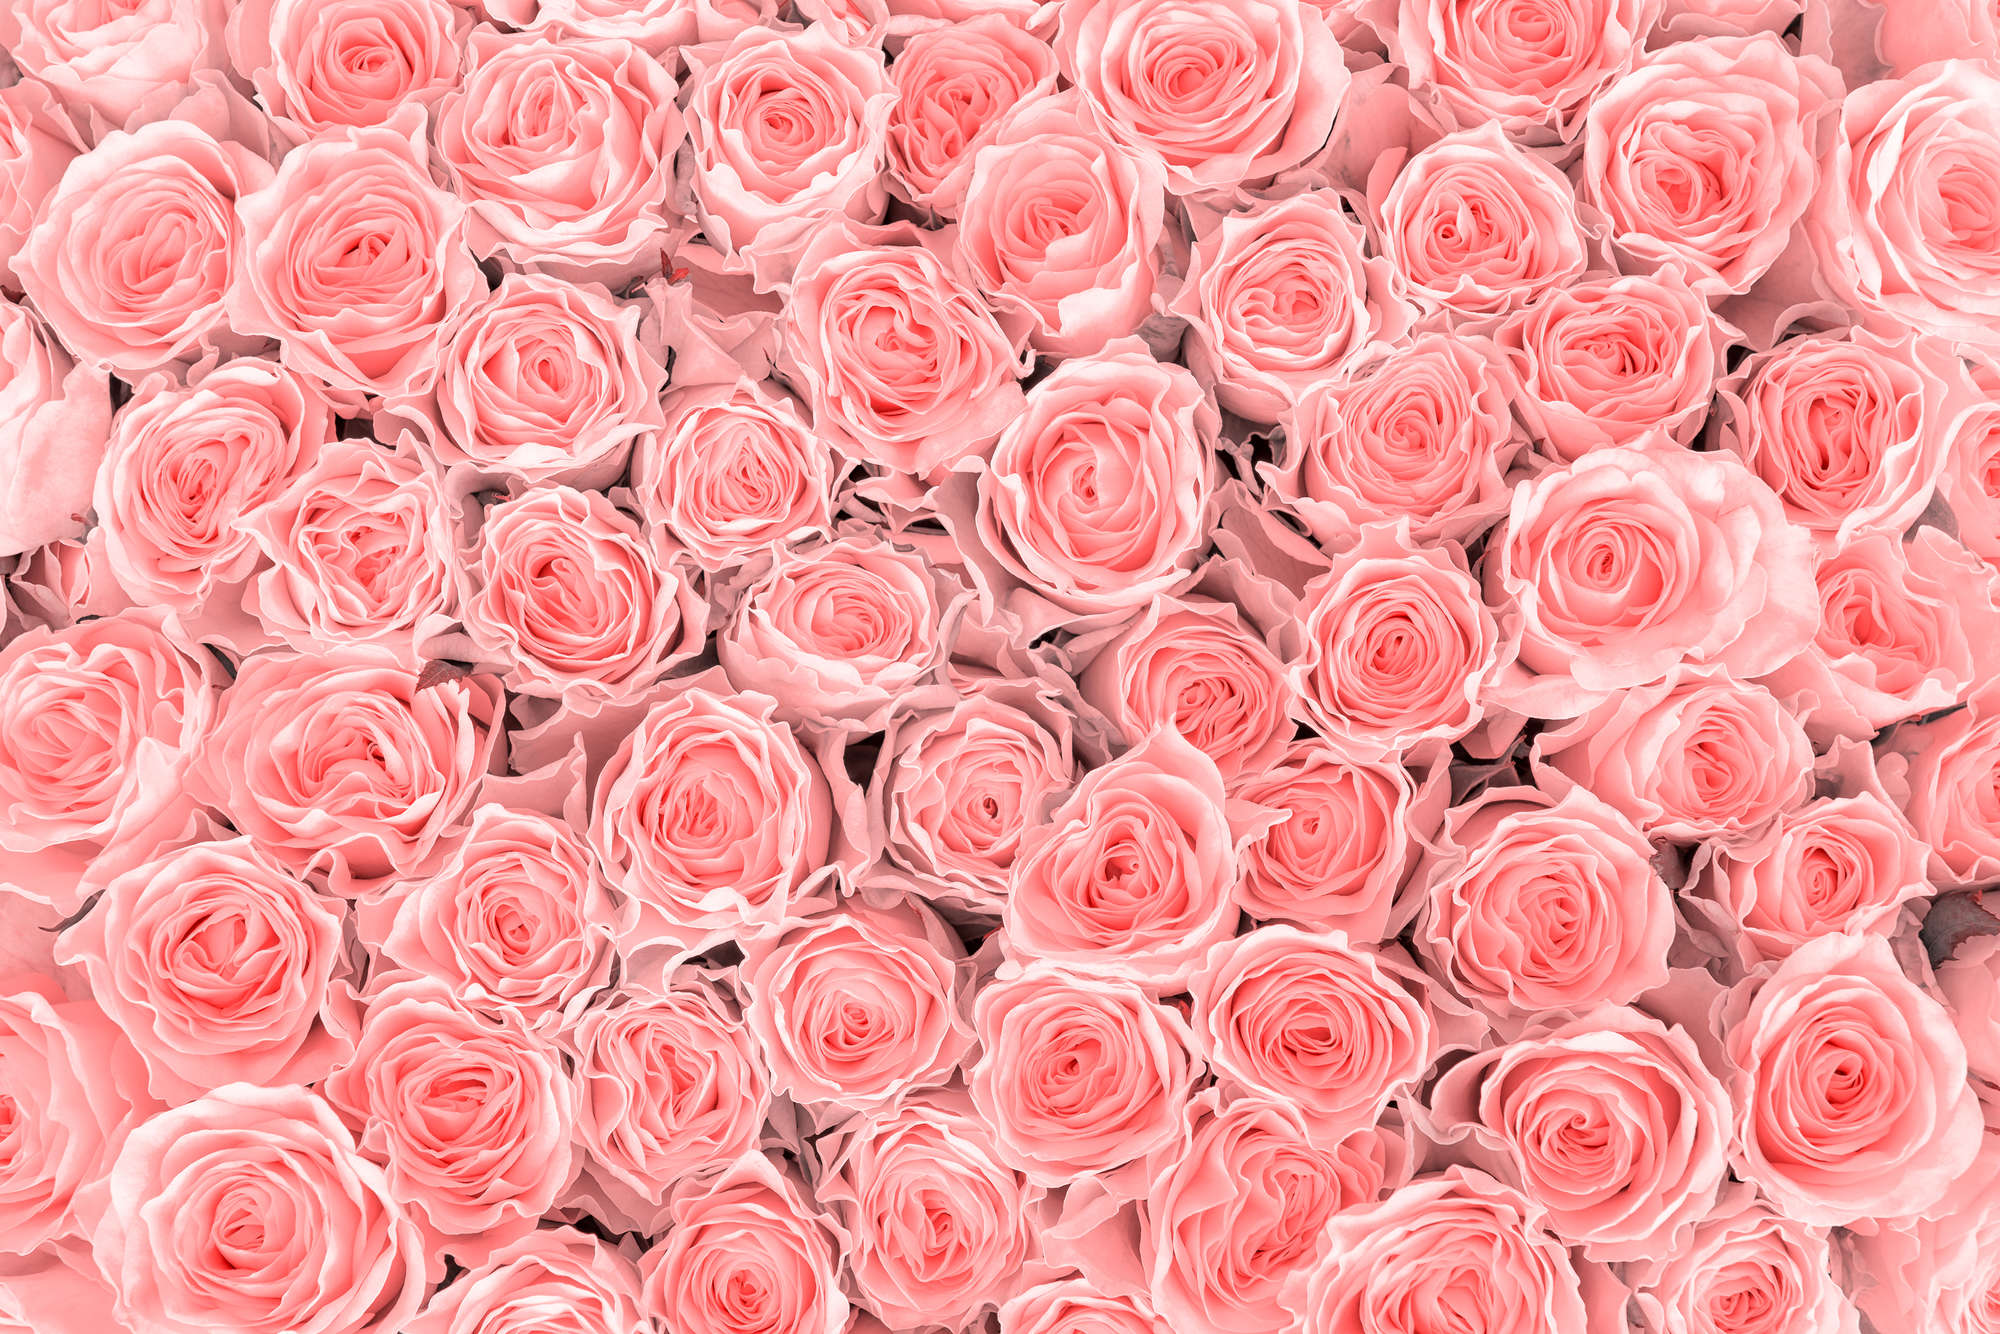             Plants mural pink roses on premium smooth fleece
        